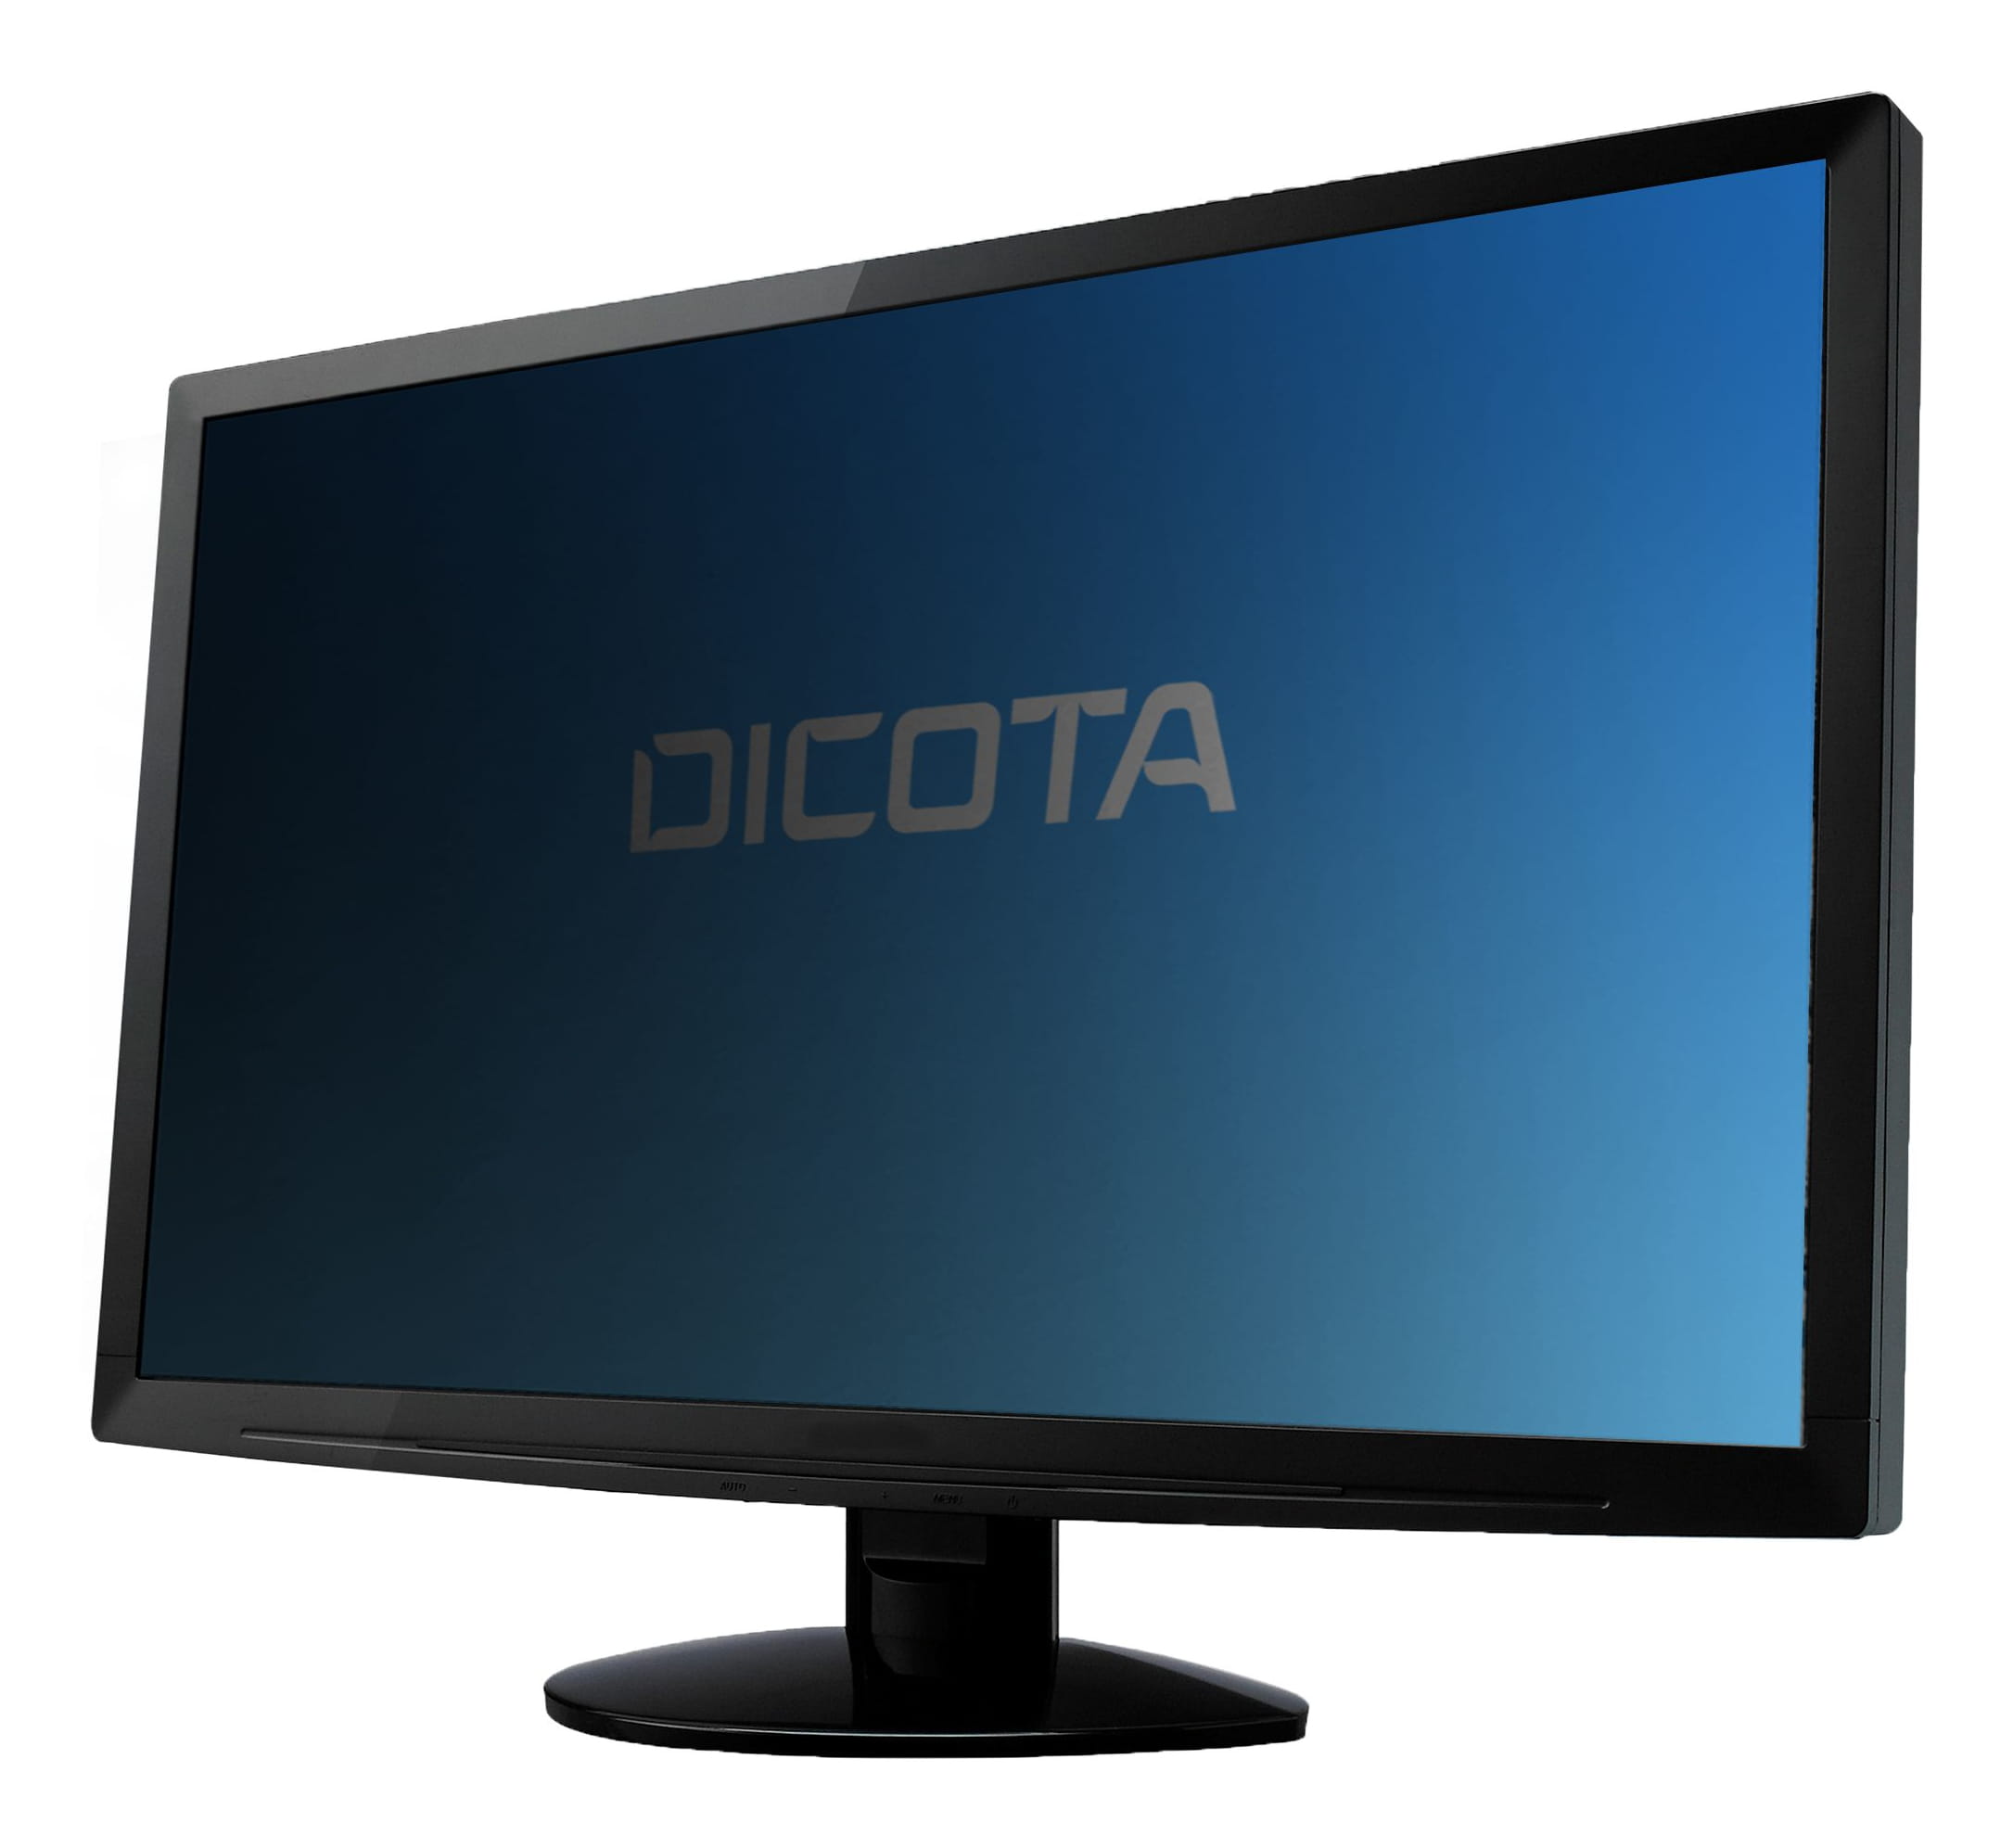 Dicota Secret - Blickschutzfilter für Bildschirme - 2-Wege - entfernbar - klebend - 71,1 cm Breitbild (28 Zoll Breitbild)